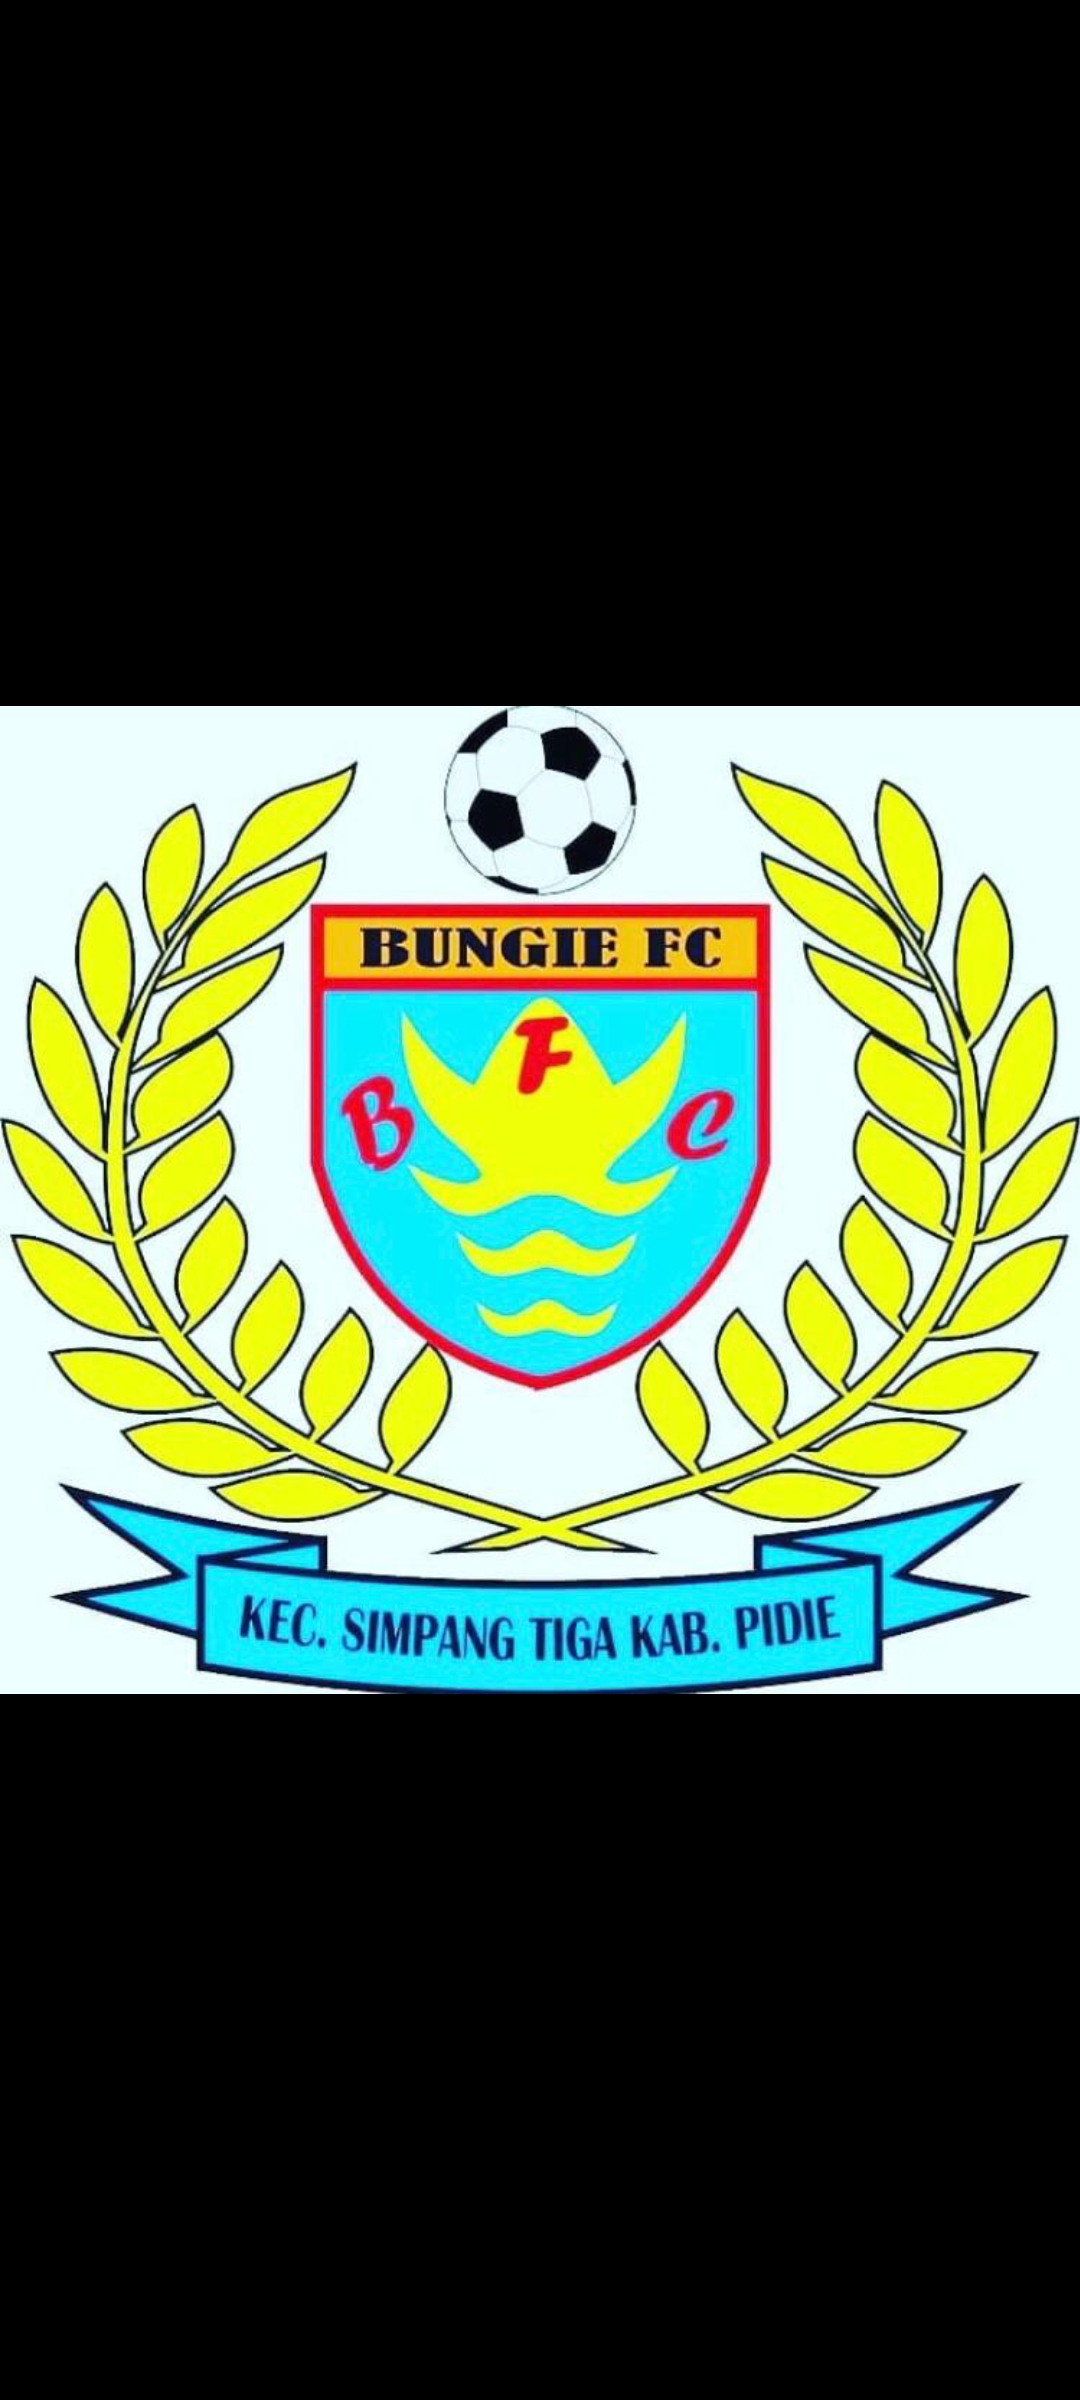 BUNGIE FC